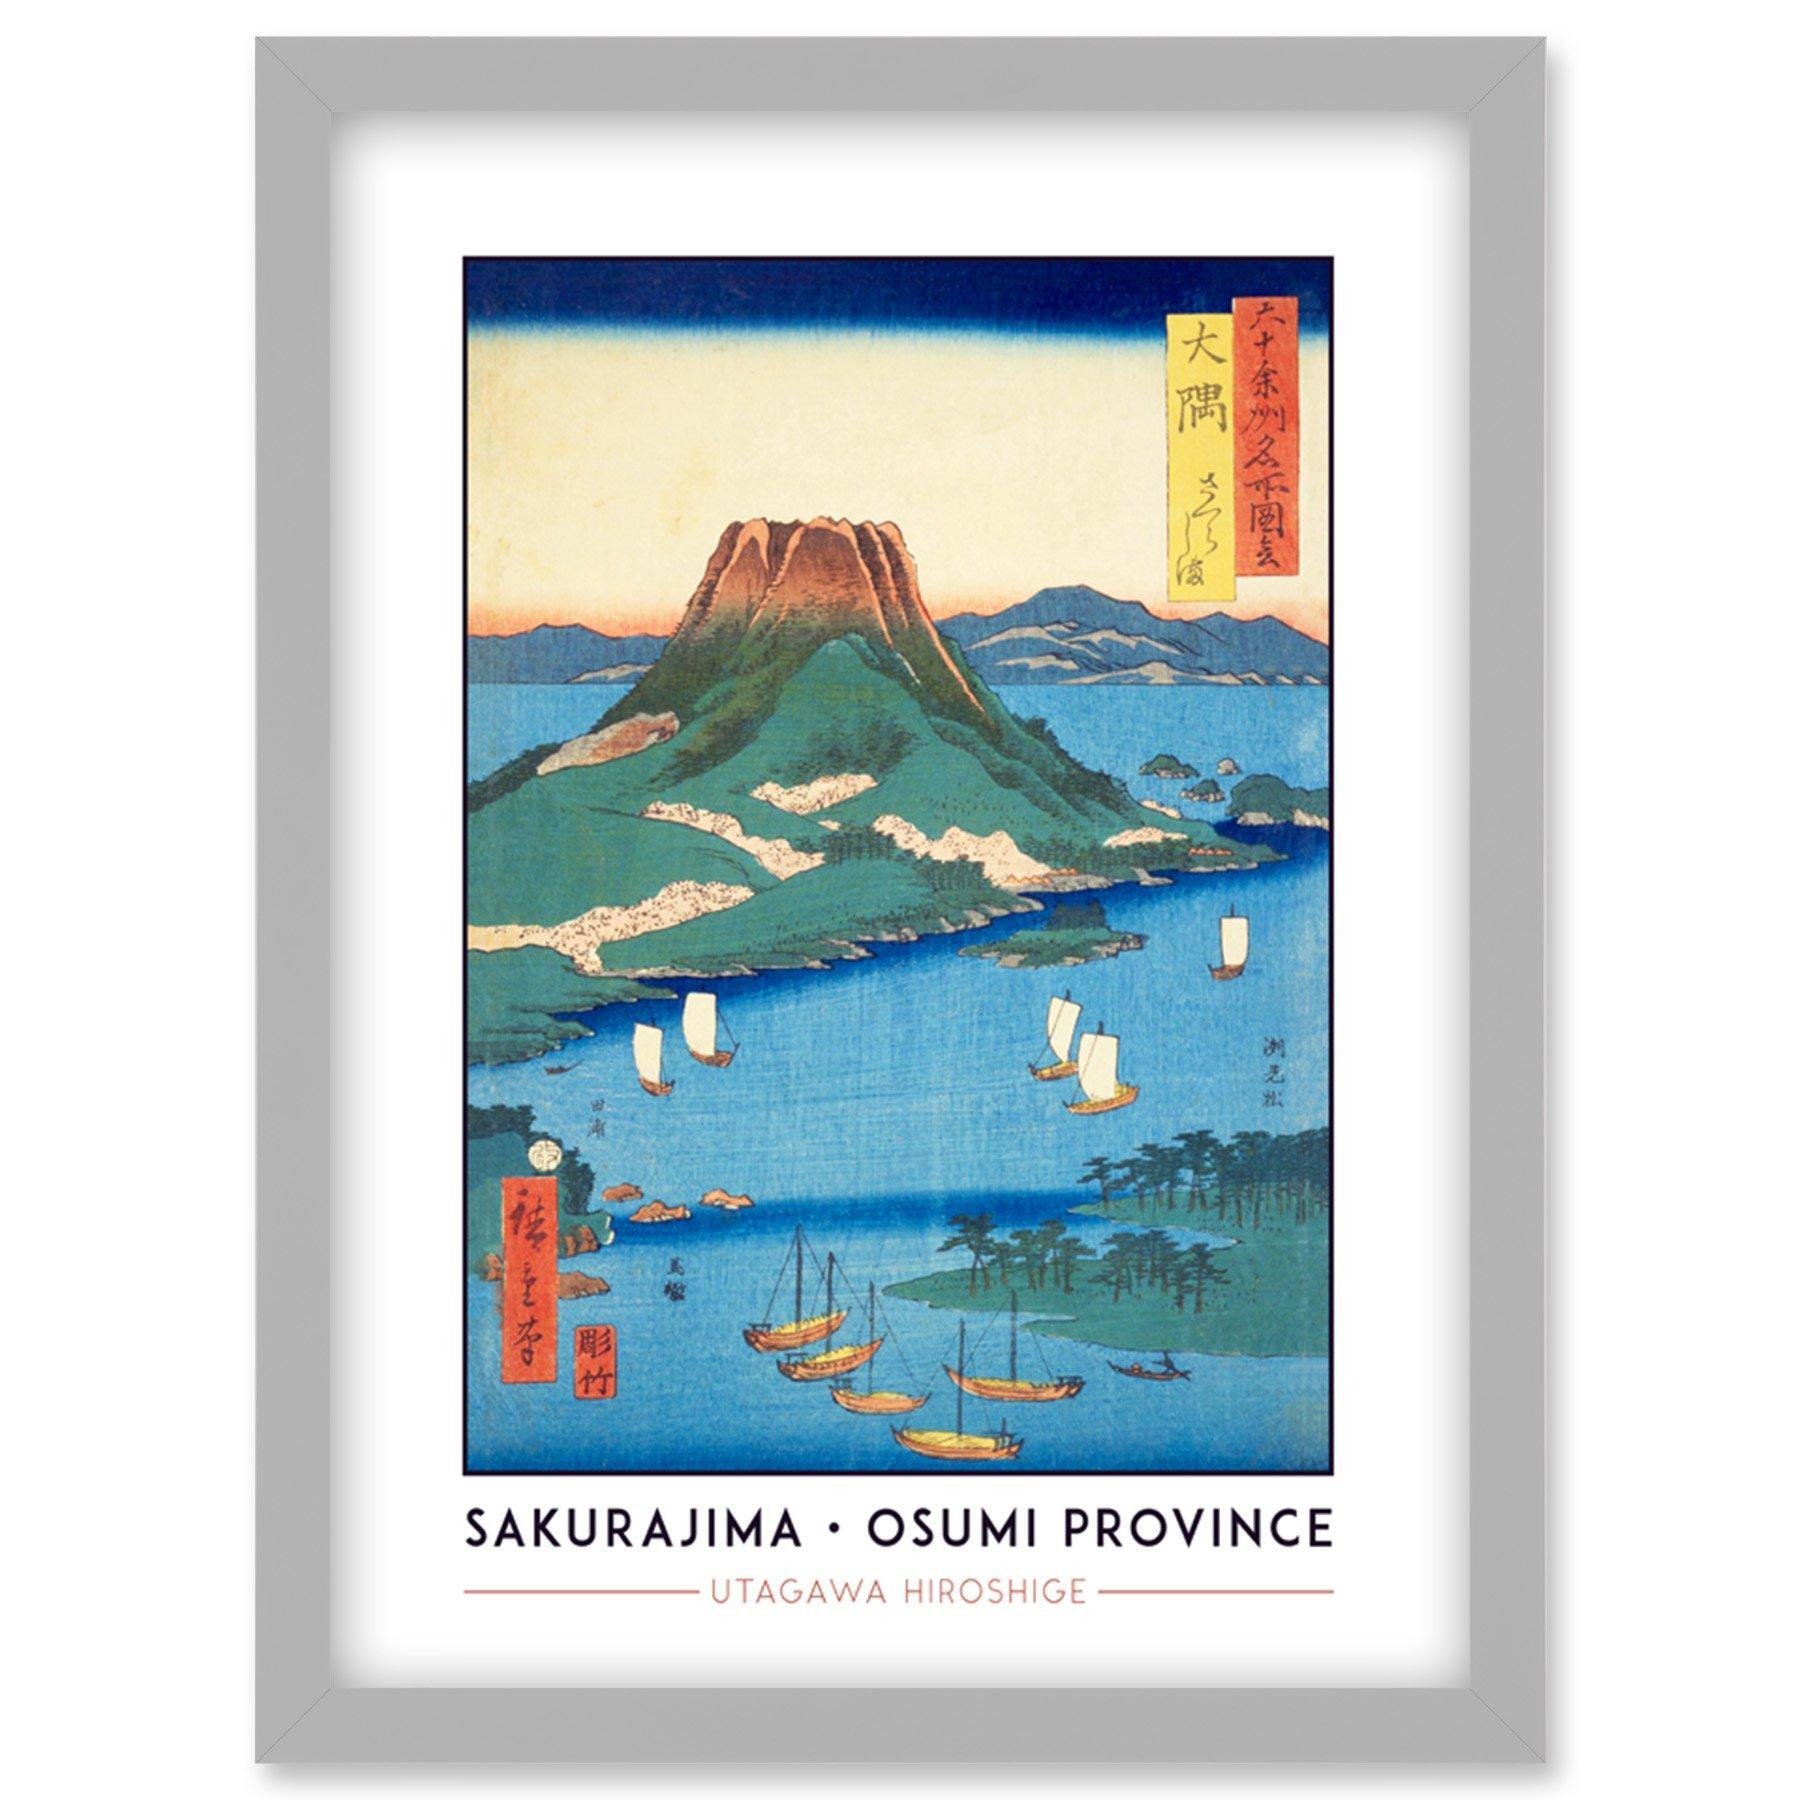 Sakurajima Osumi Province Utagawa Hiroshige Japan Woodblock Classic Collection Artwork Framed Wall Art Print A4 - image 1